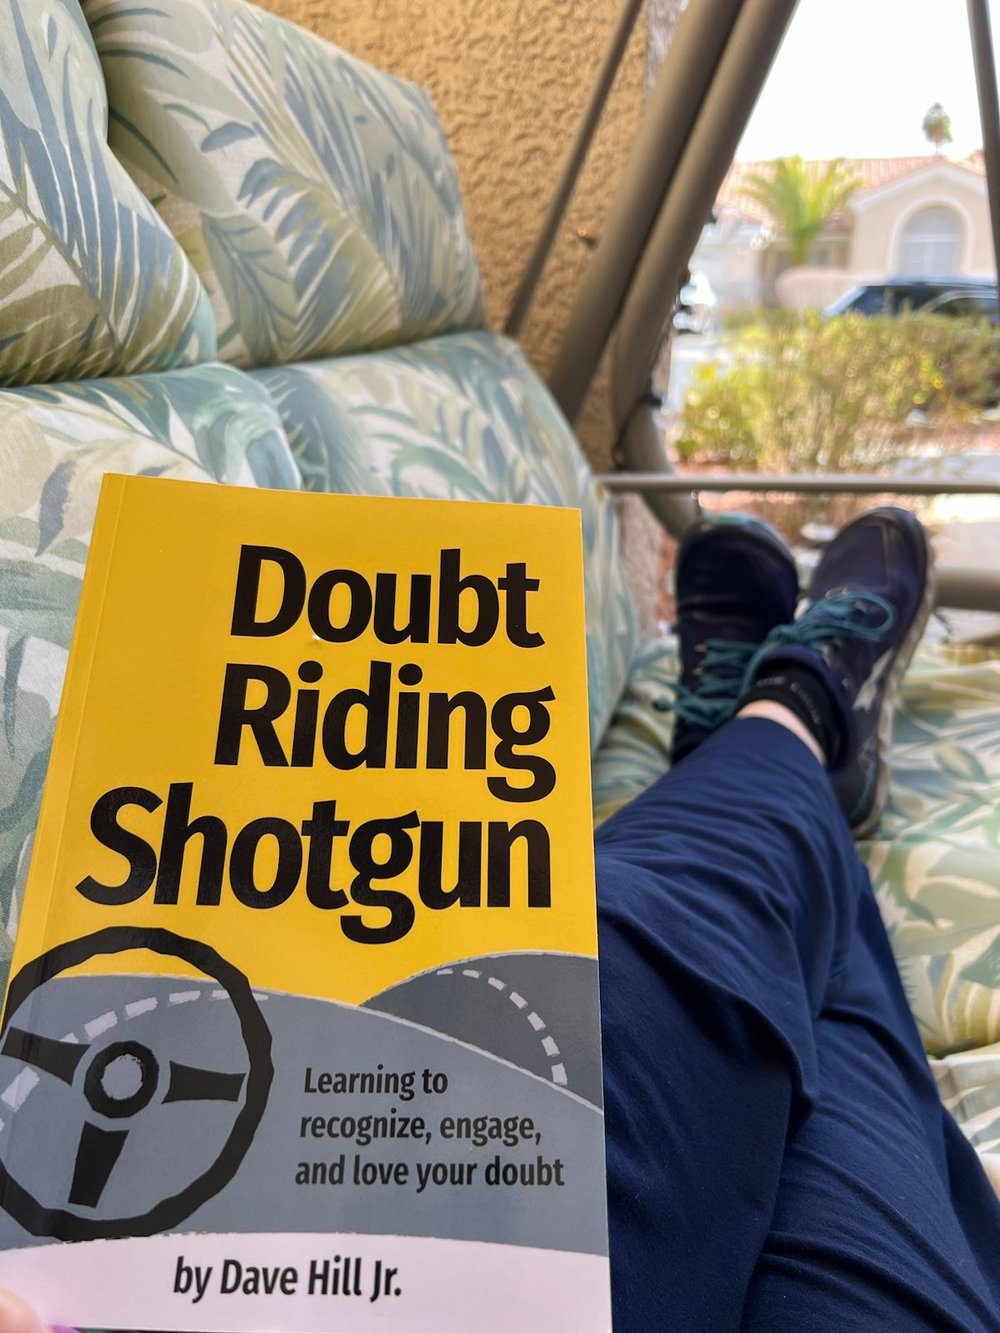 Laying-back-reading-of-doubt-riding-shotgun-book.jpg